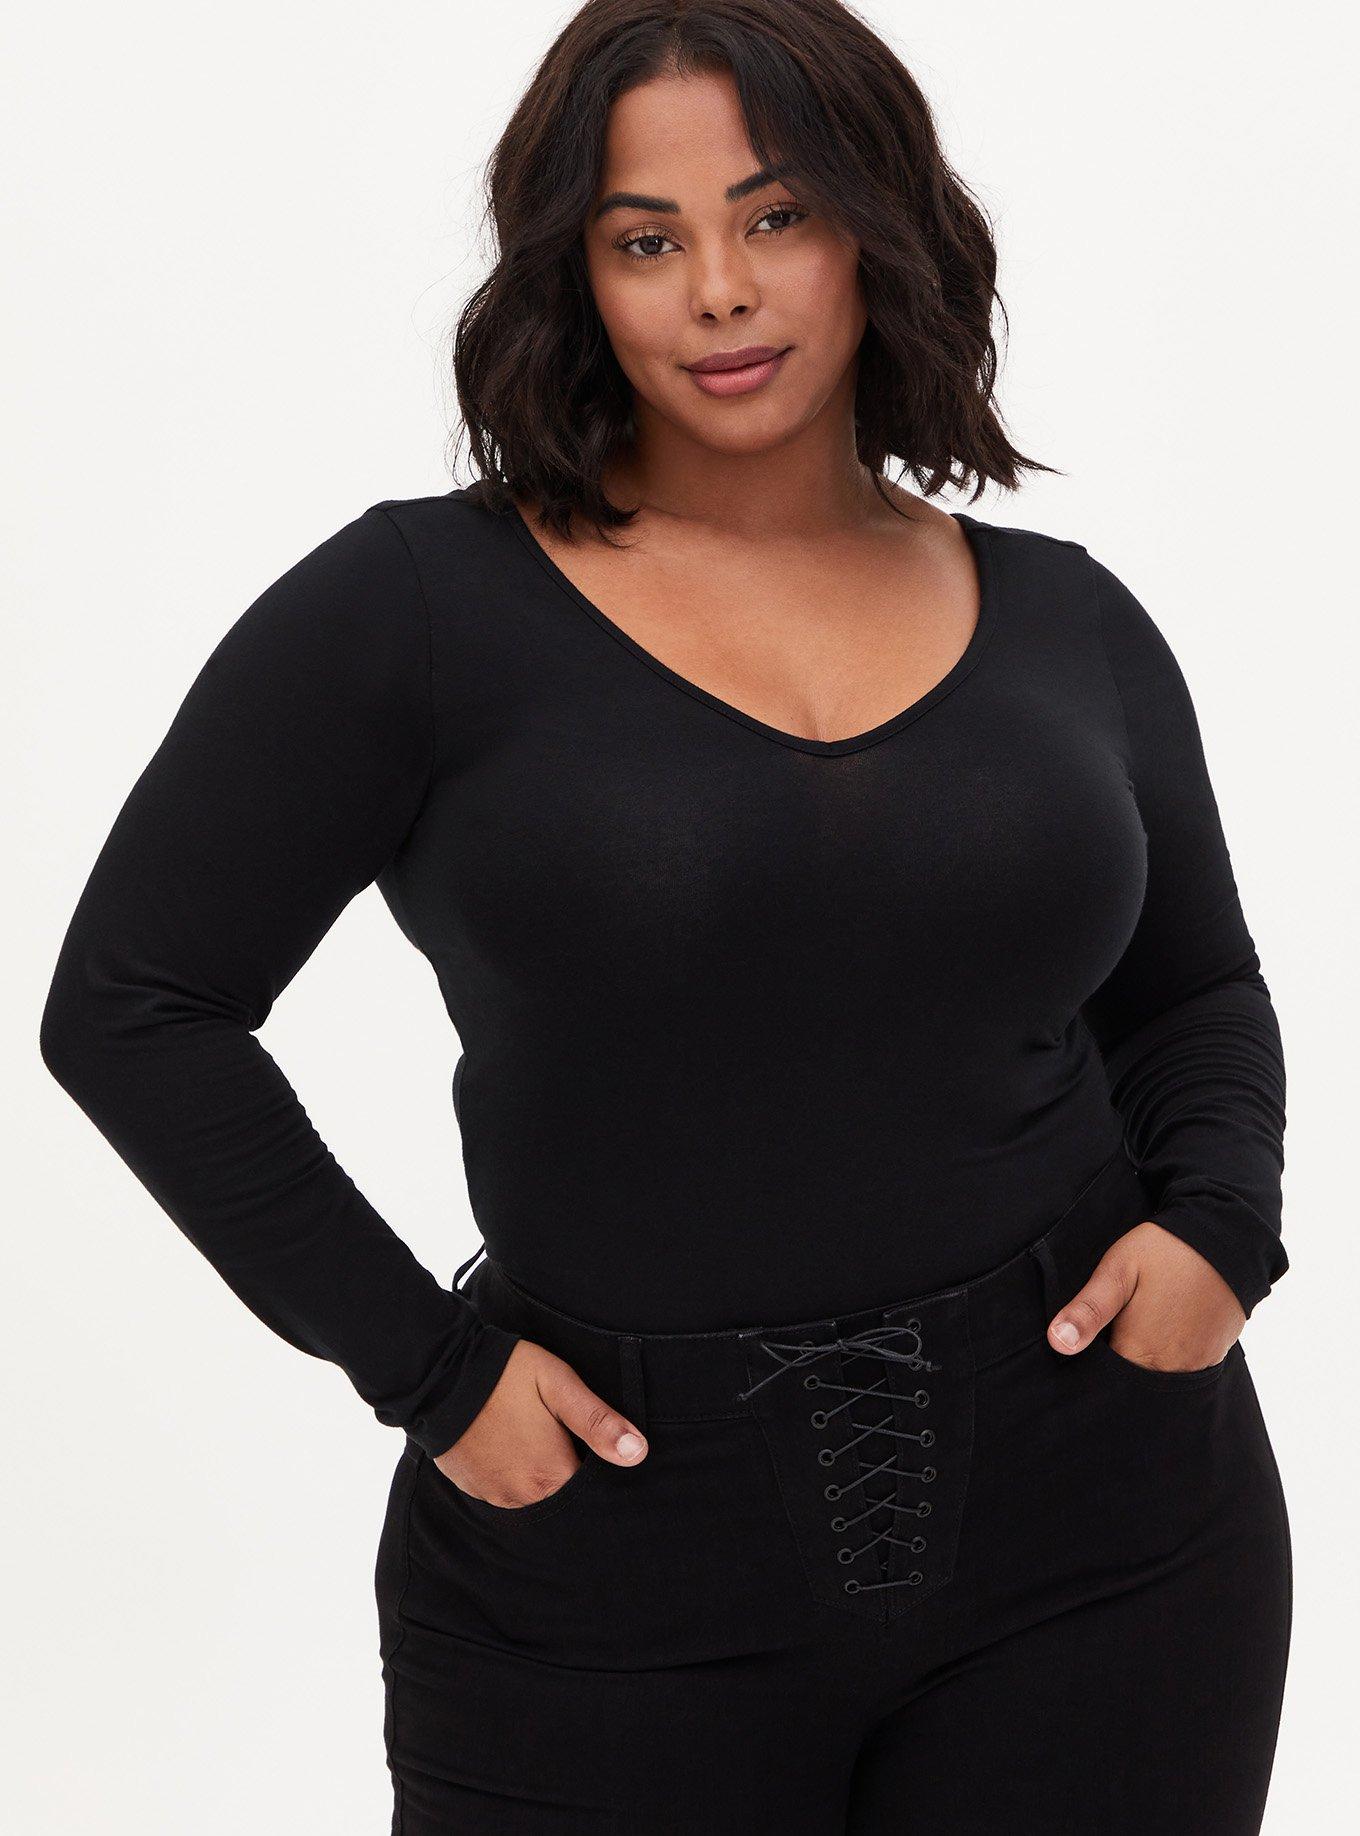 Black Rose Bodysuit (Long Sleeve) – Georgia Rose Label